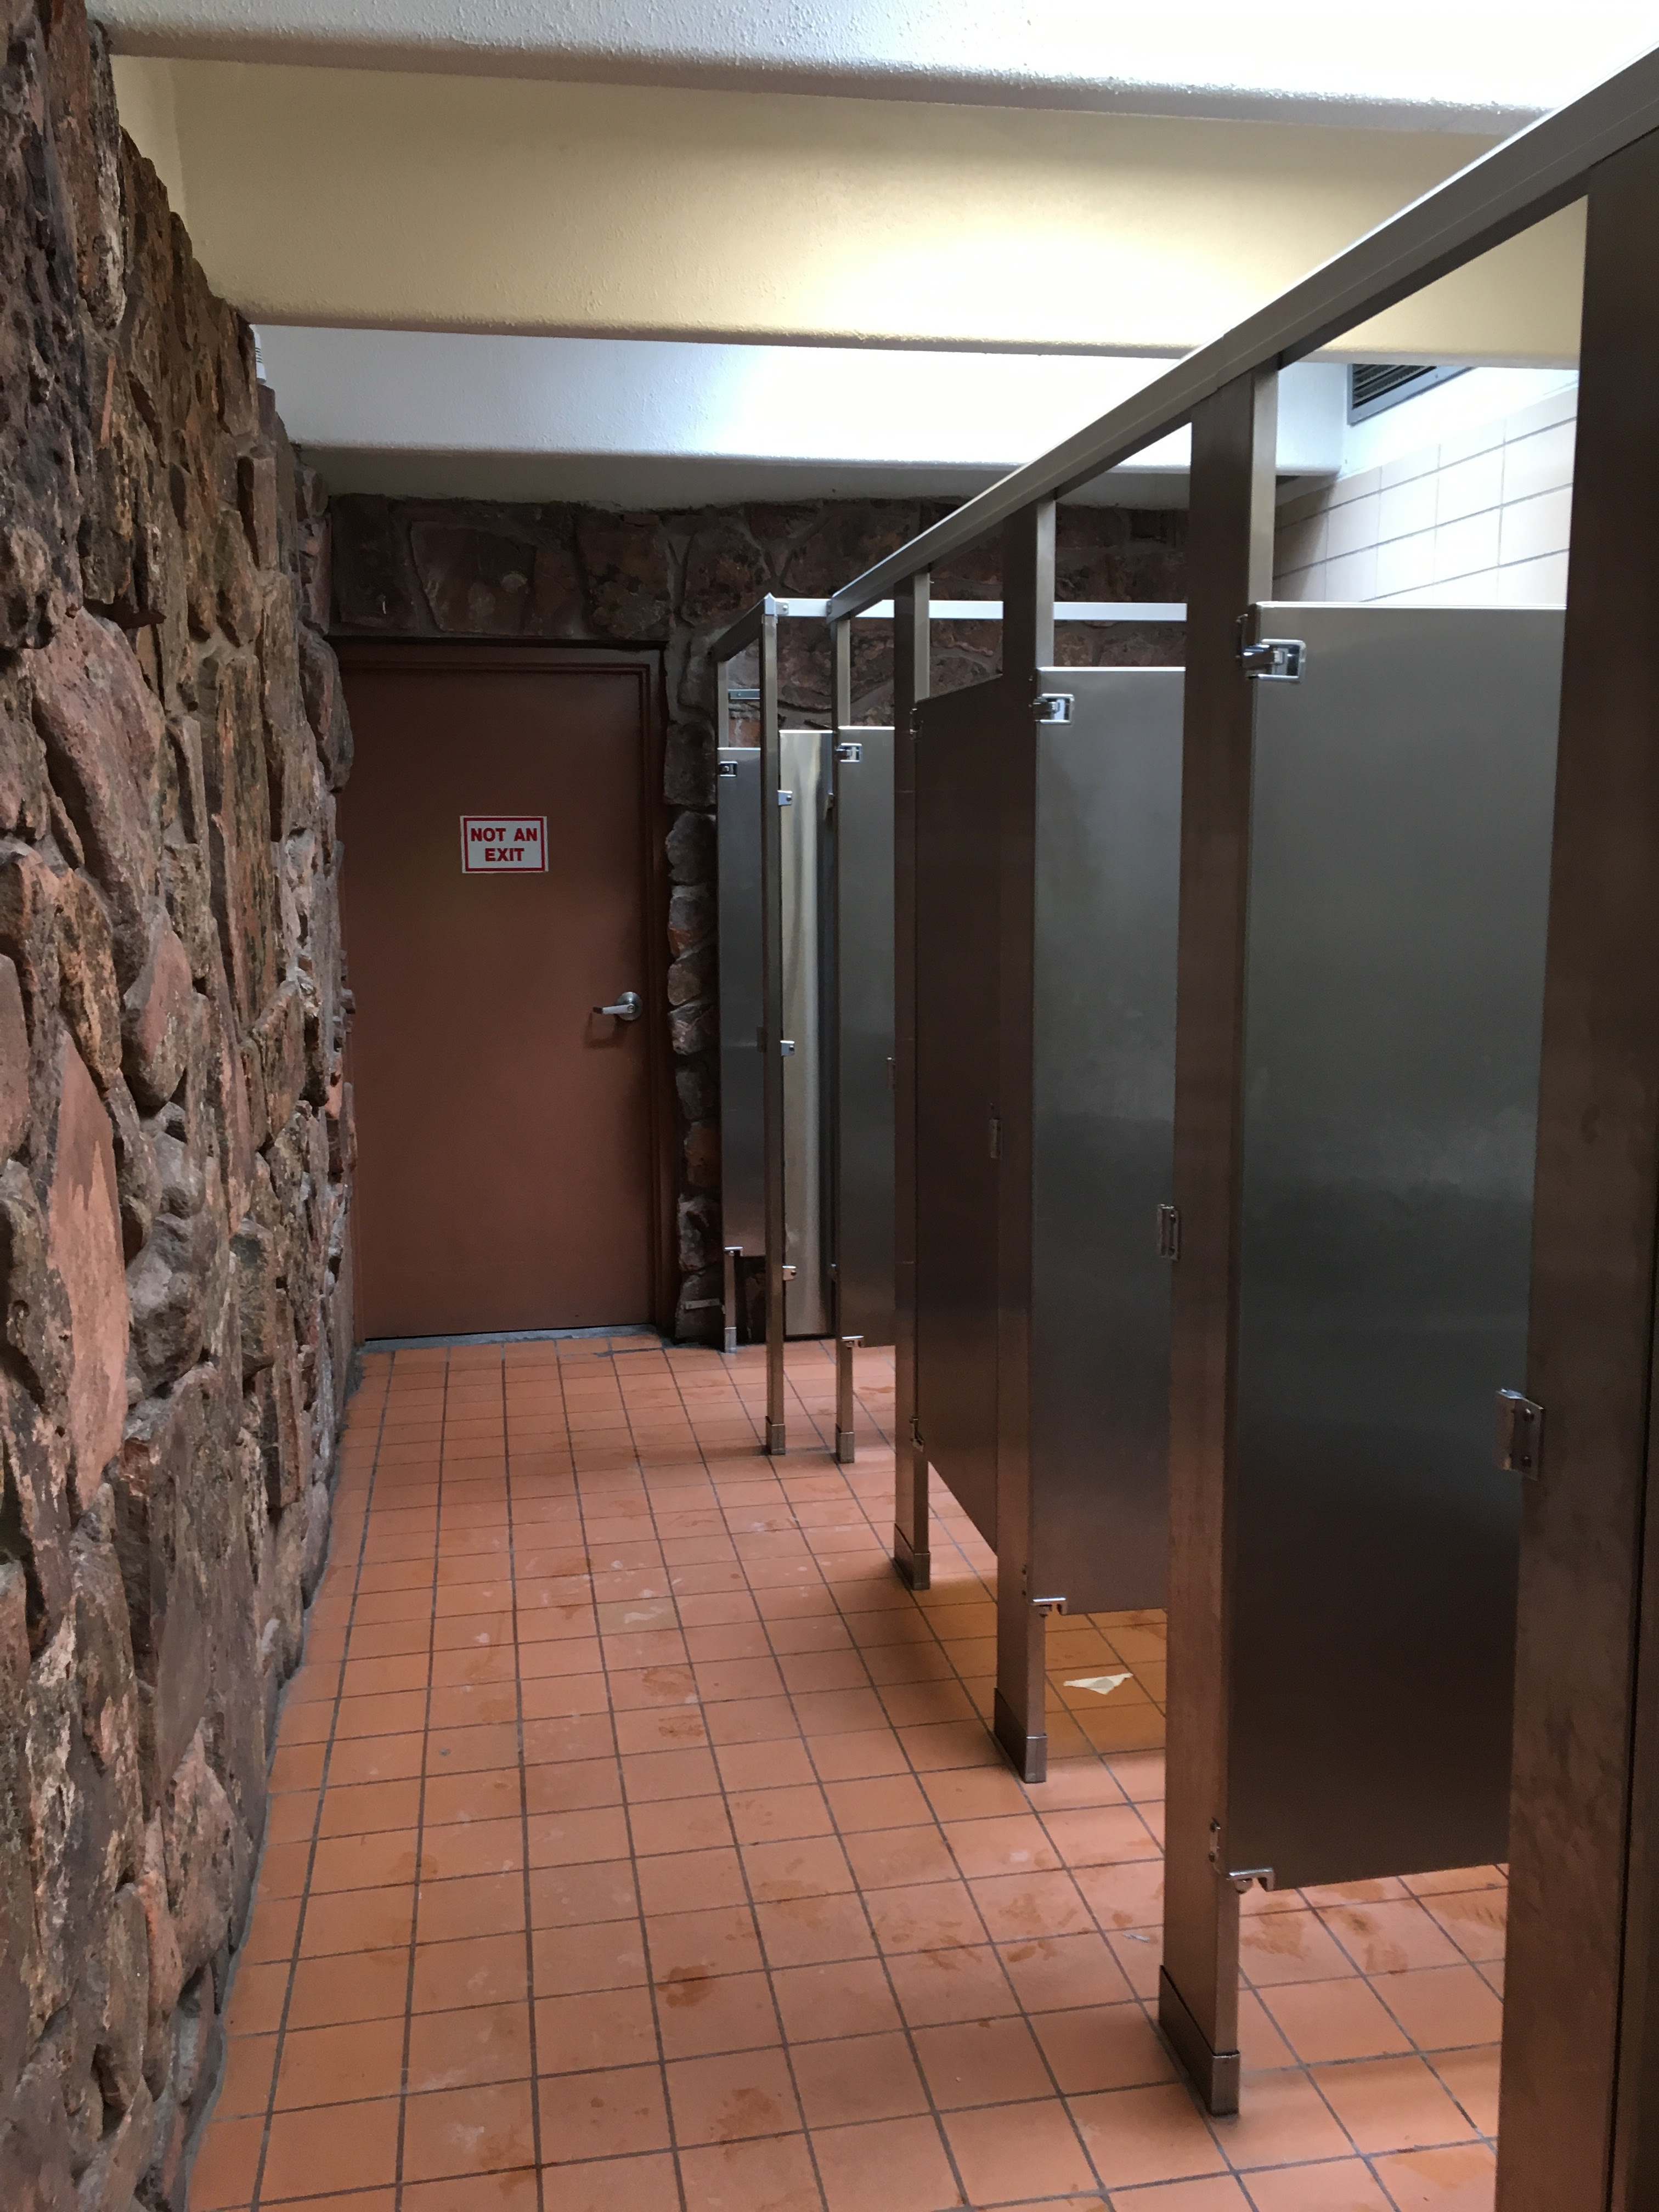 Pueblo rest area bathroom stalls detail image